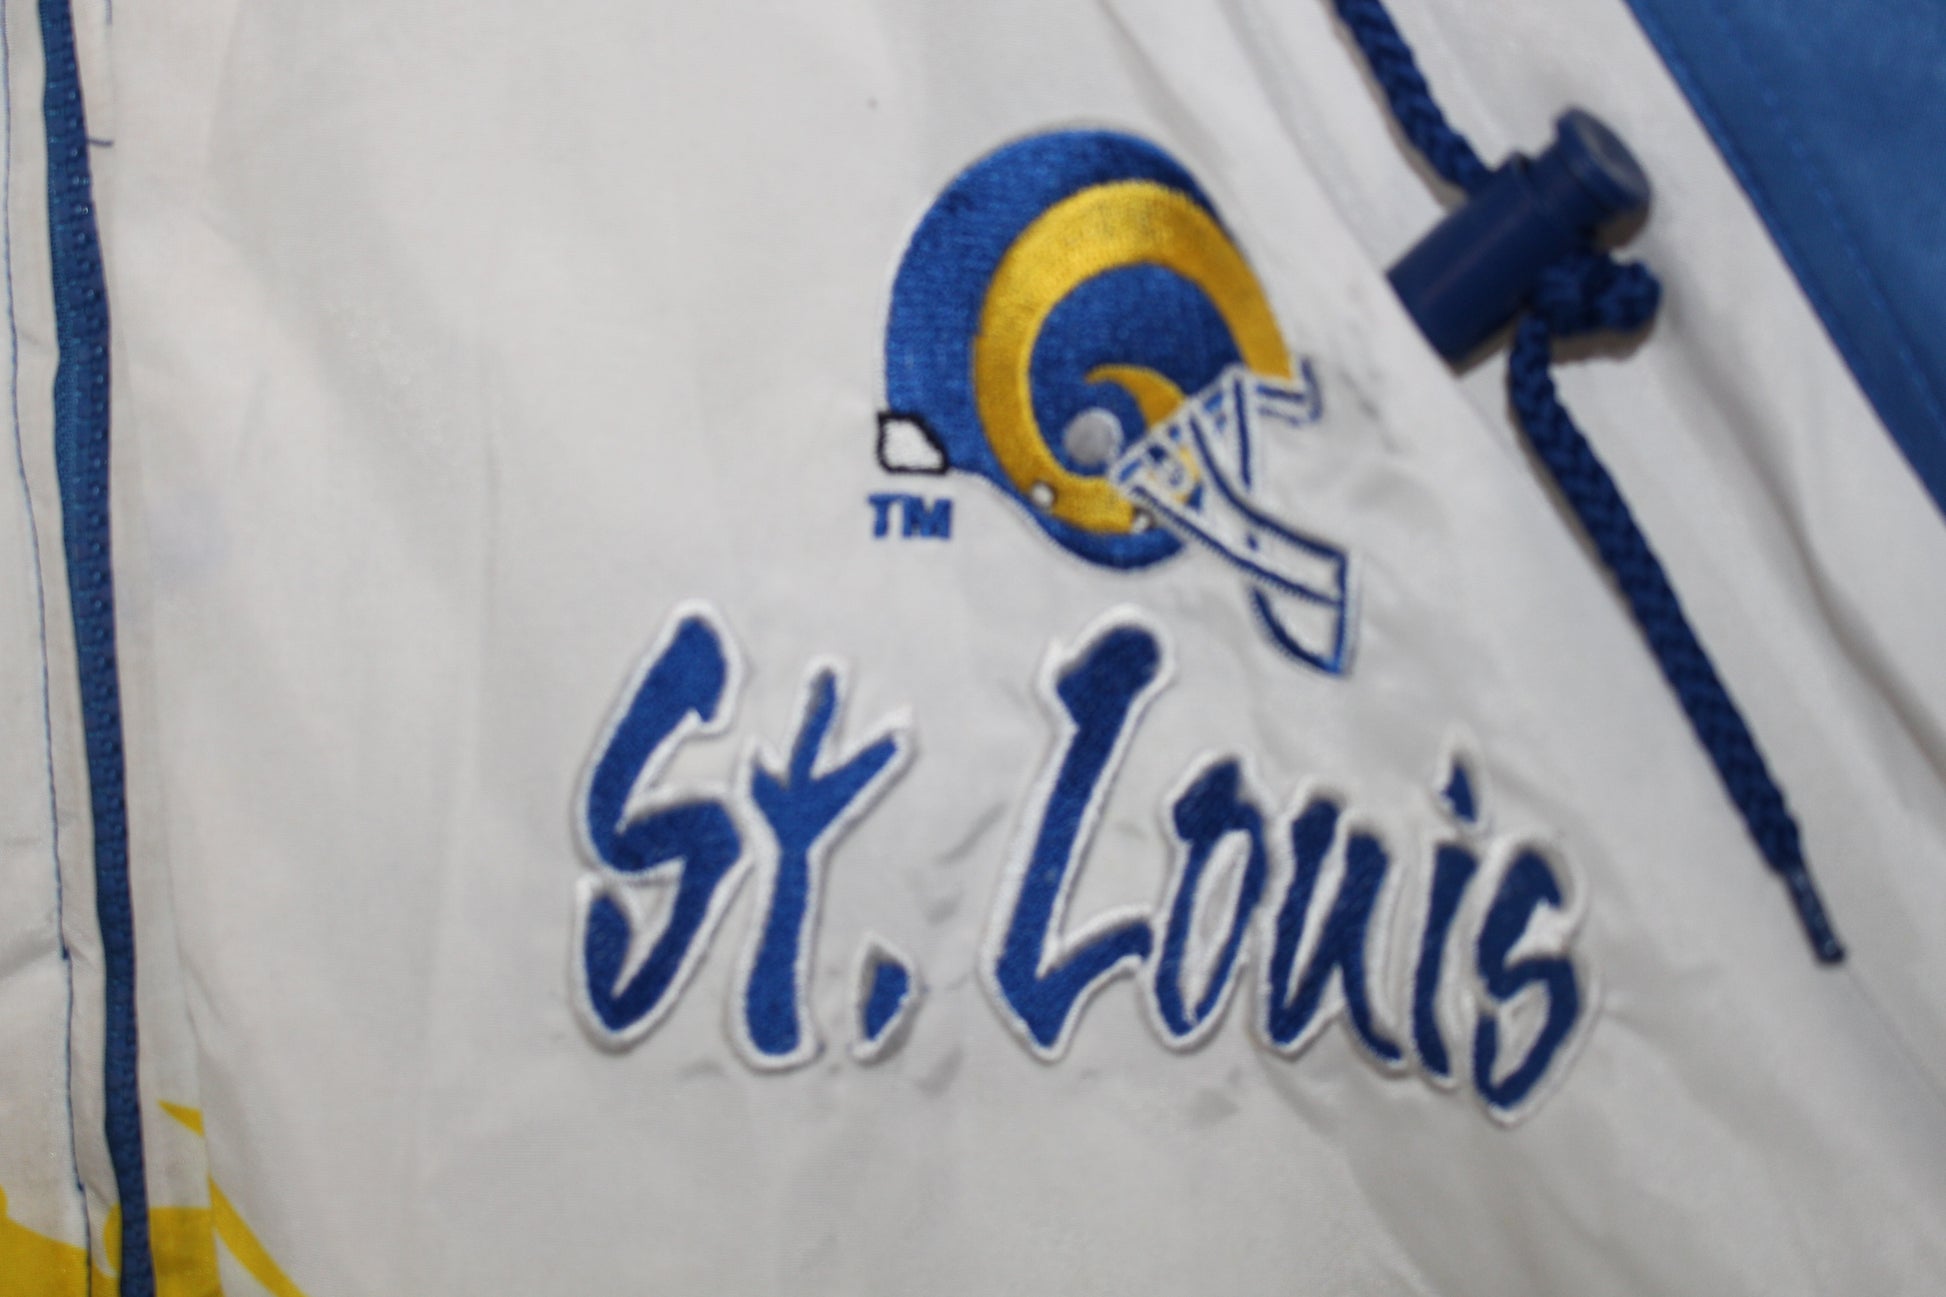 Vintage St. Louis Rams NFL Pro Player Sweatshirt